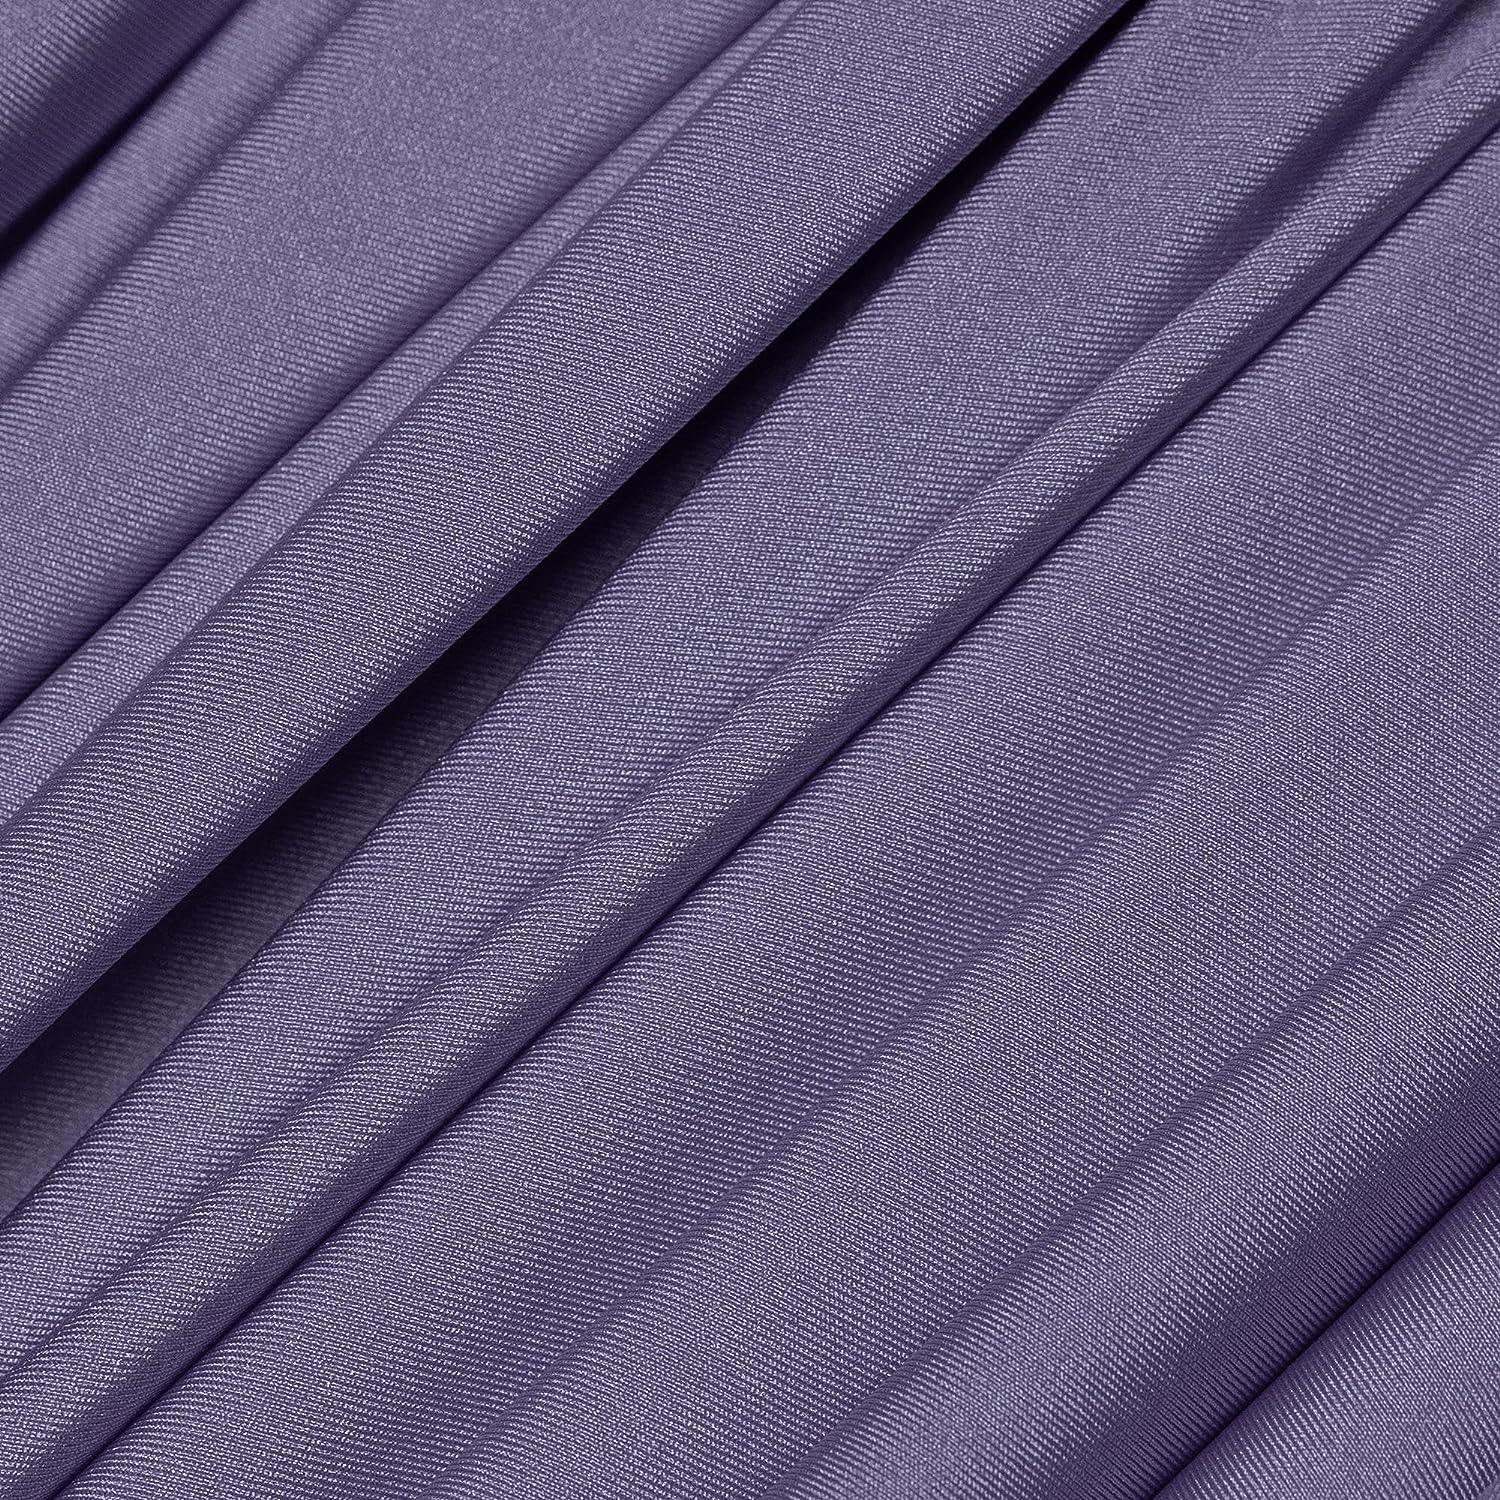 Swimsuit Fabric Nylon Spandex 4 Way Stretch